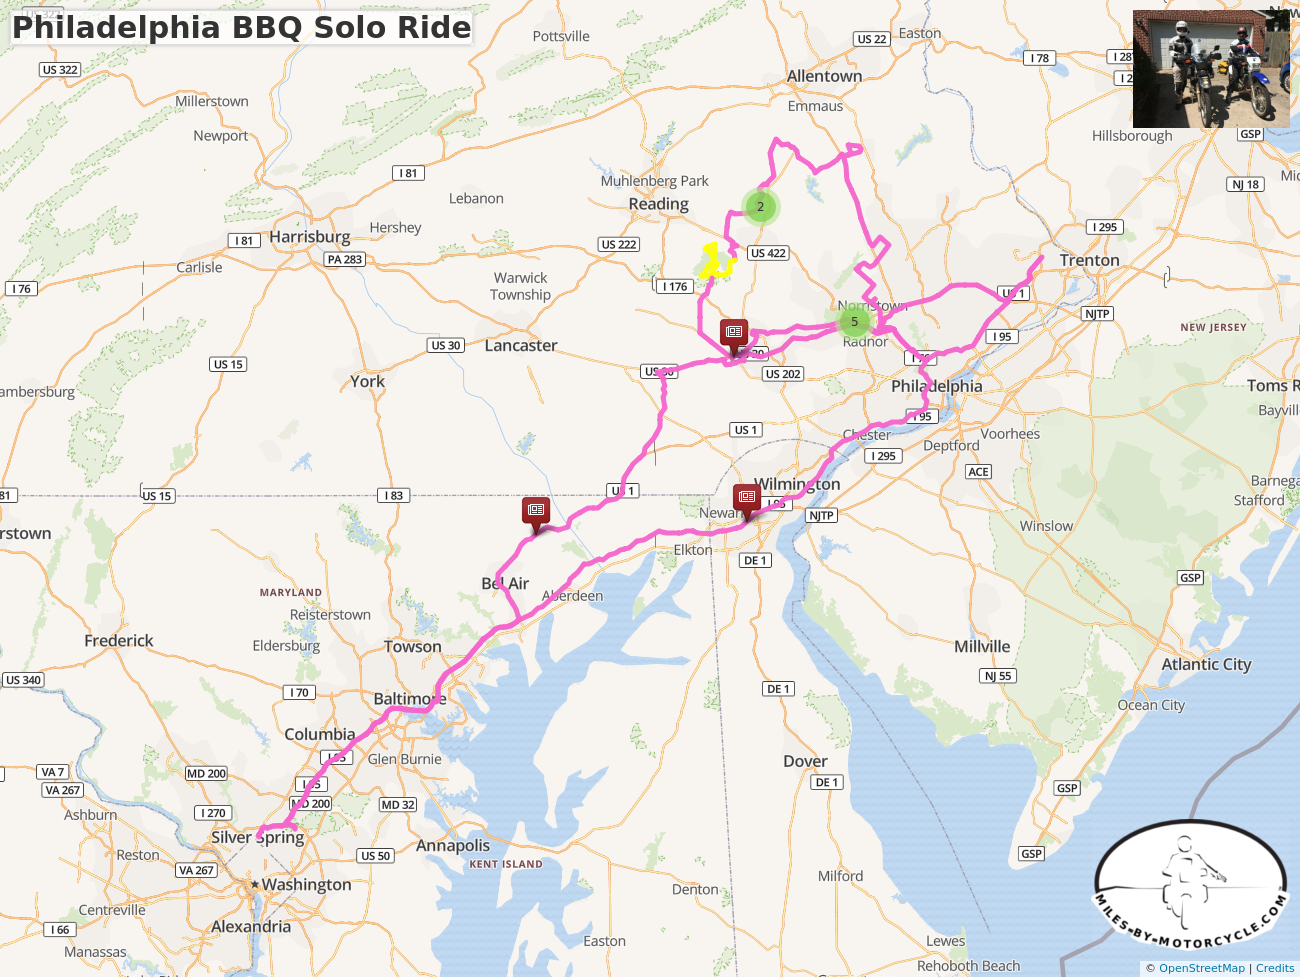 Philadelphia BBQ Solo Ride